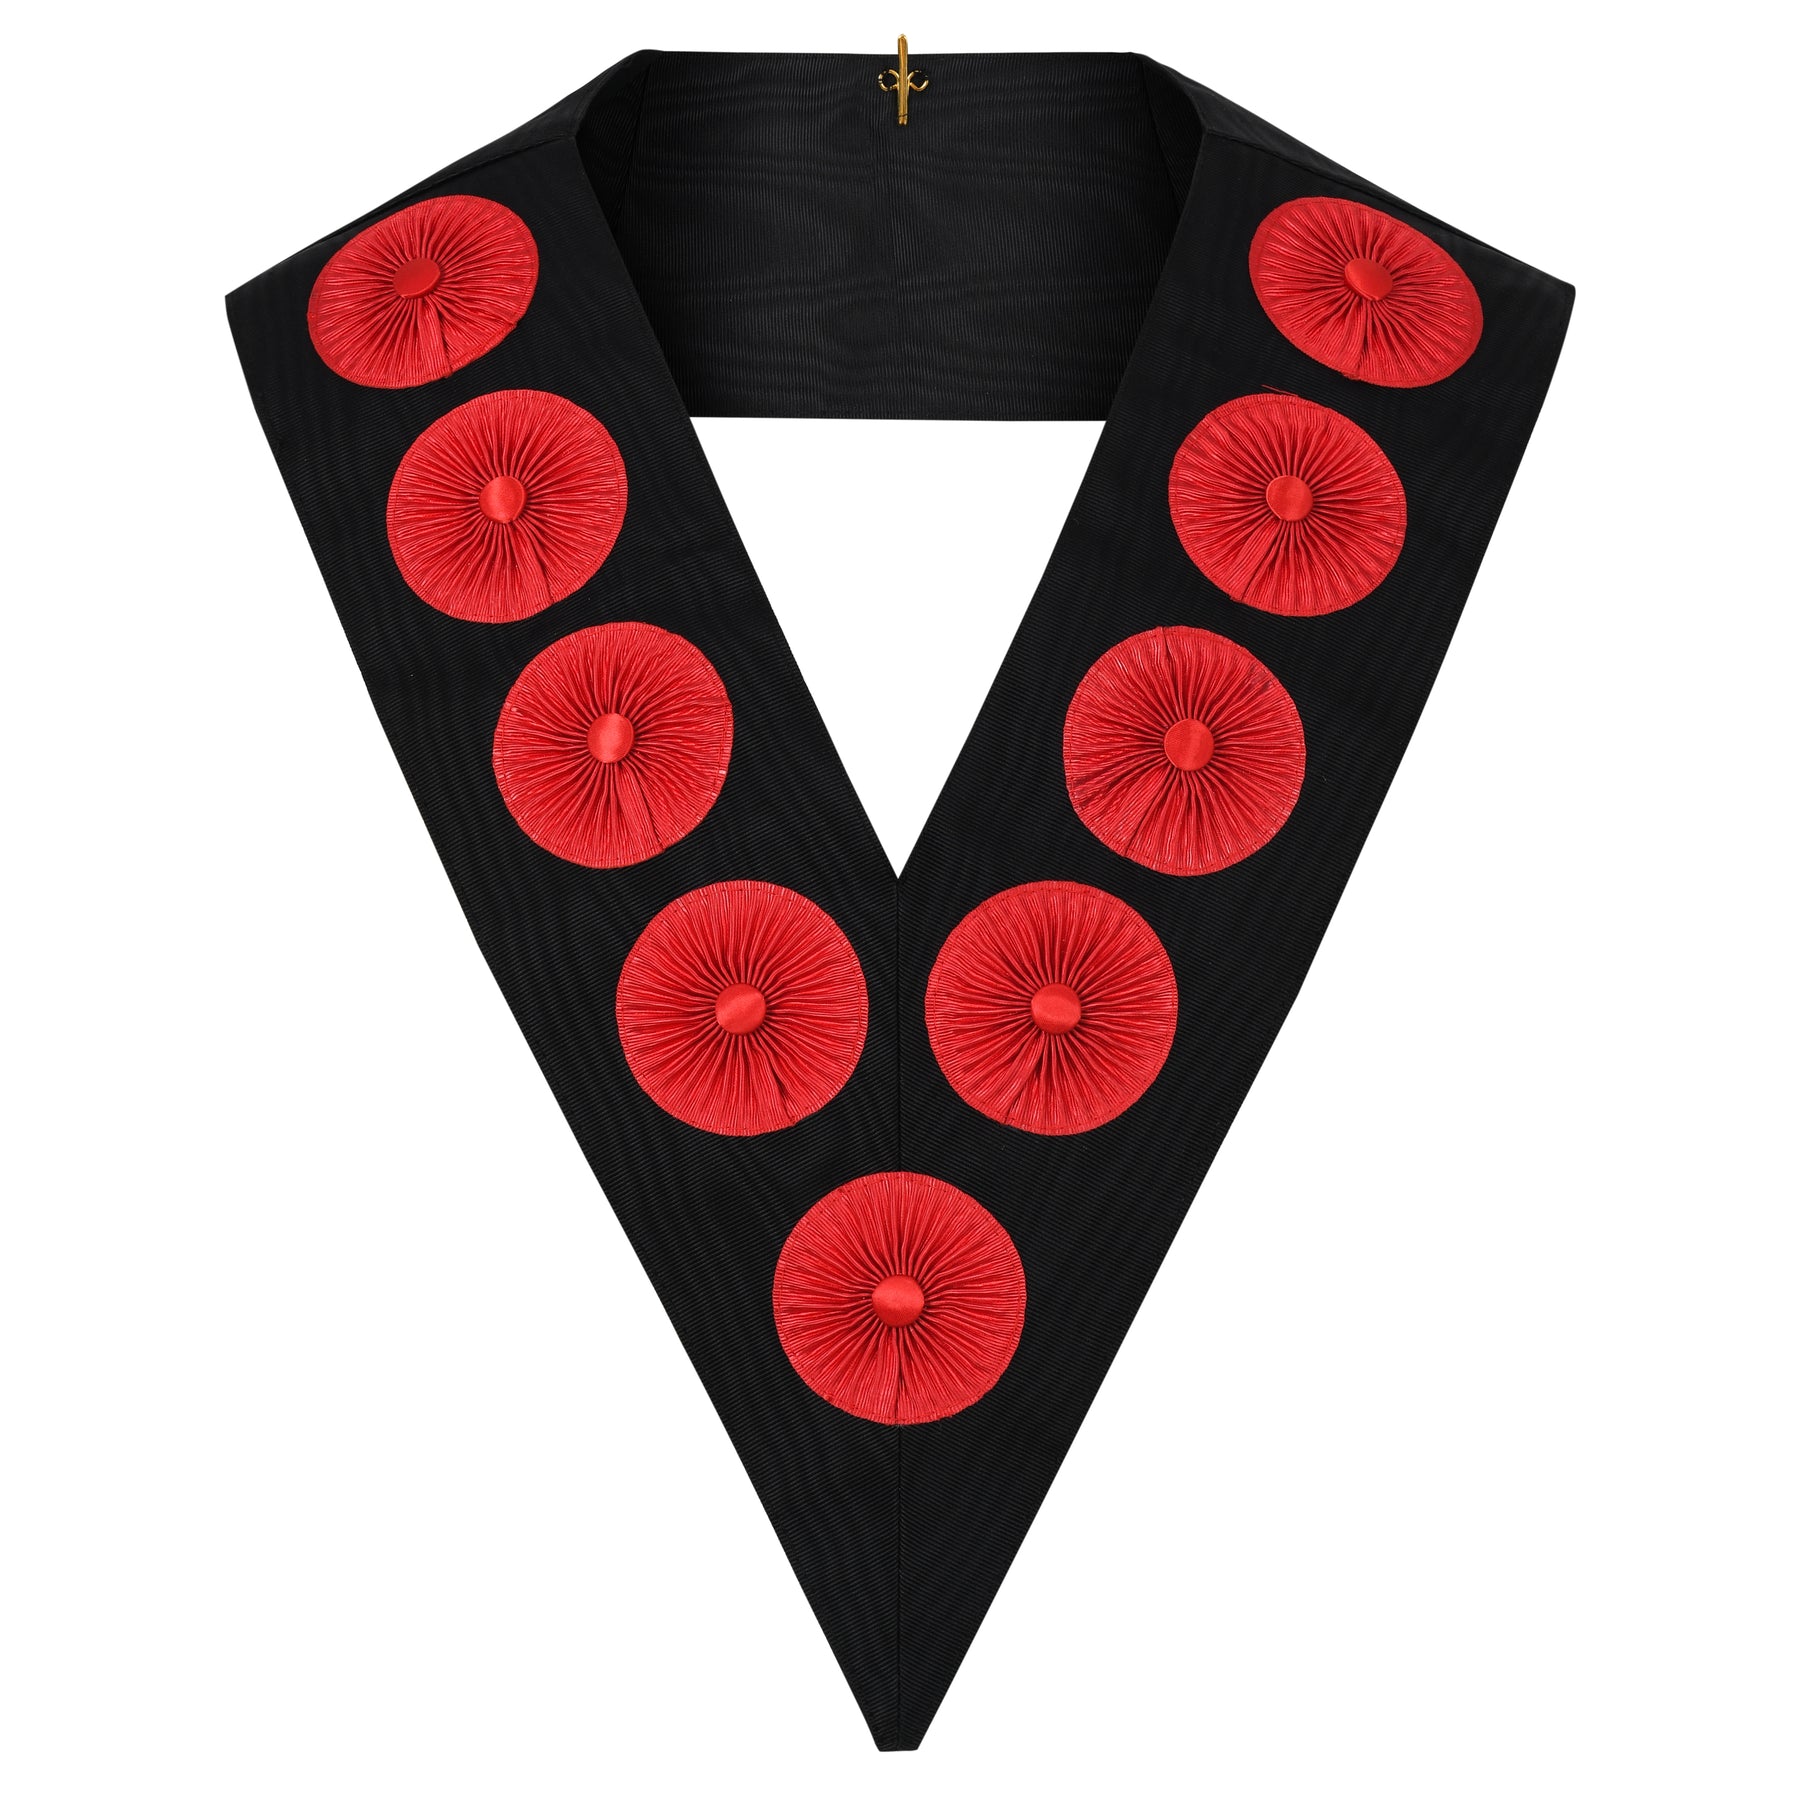 9th Degree Scottish Rite Collar - Black Moire with Nine Rosettes - Bricks Masons